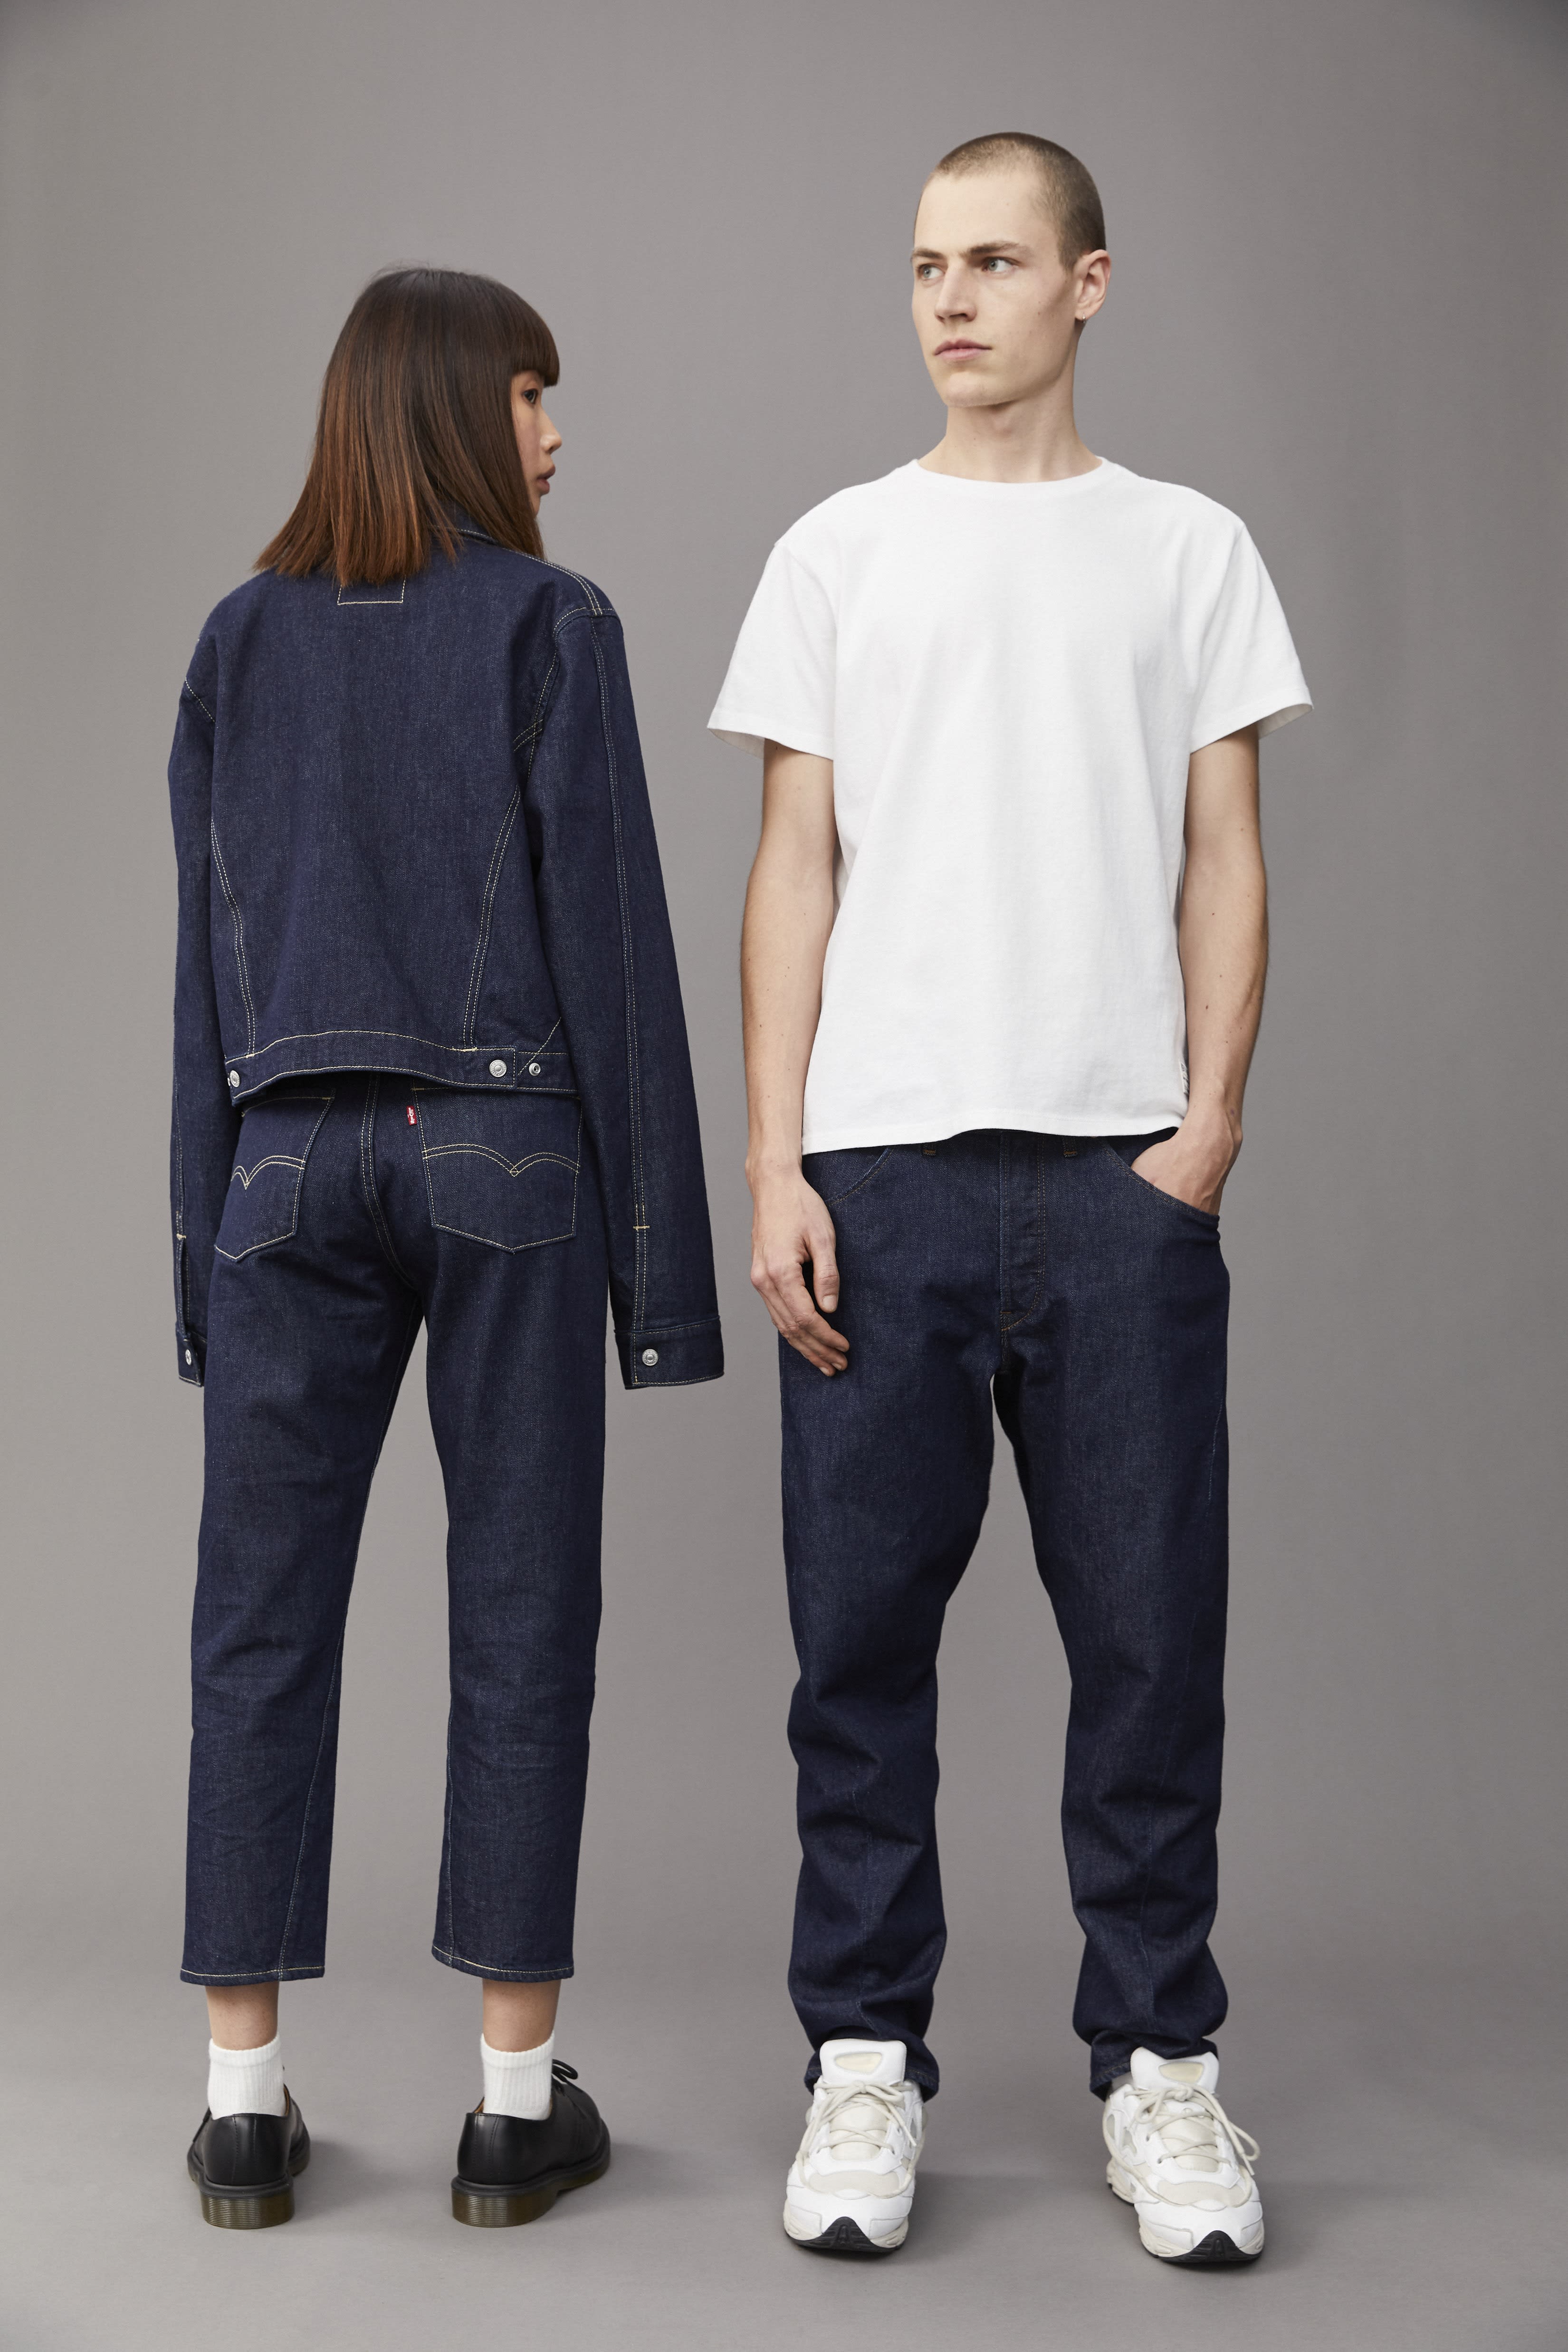 levis-engingeered-jeans1